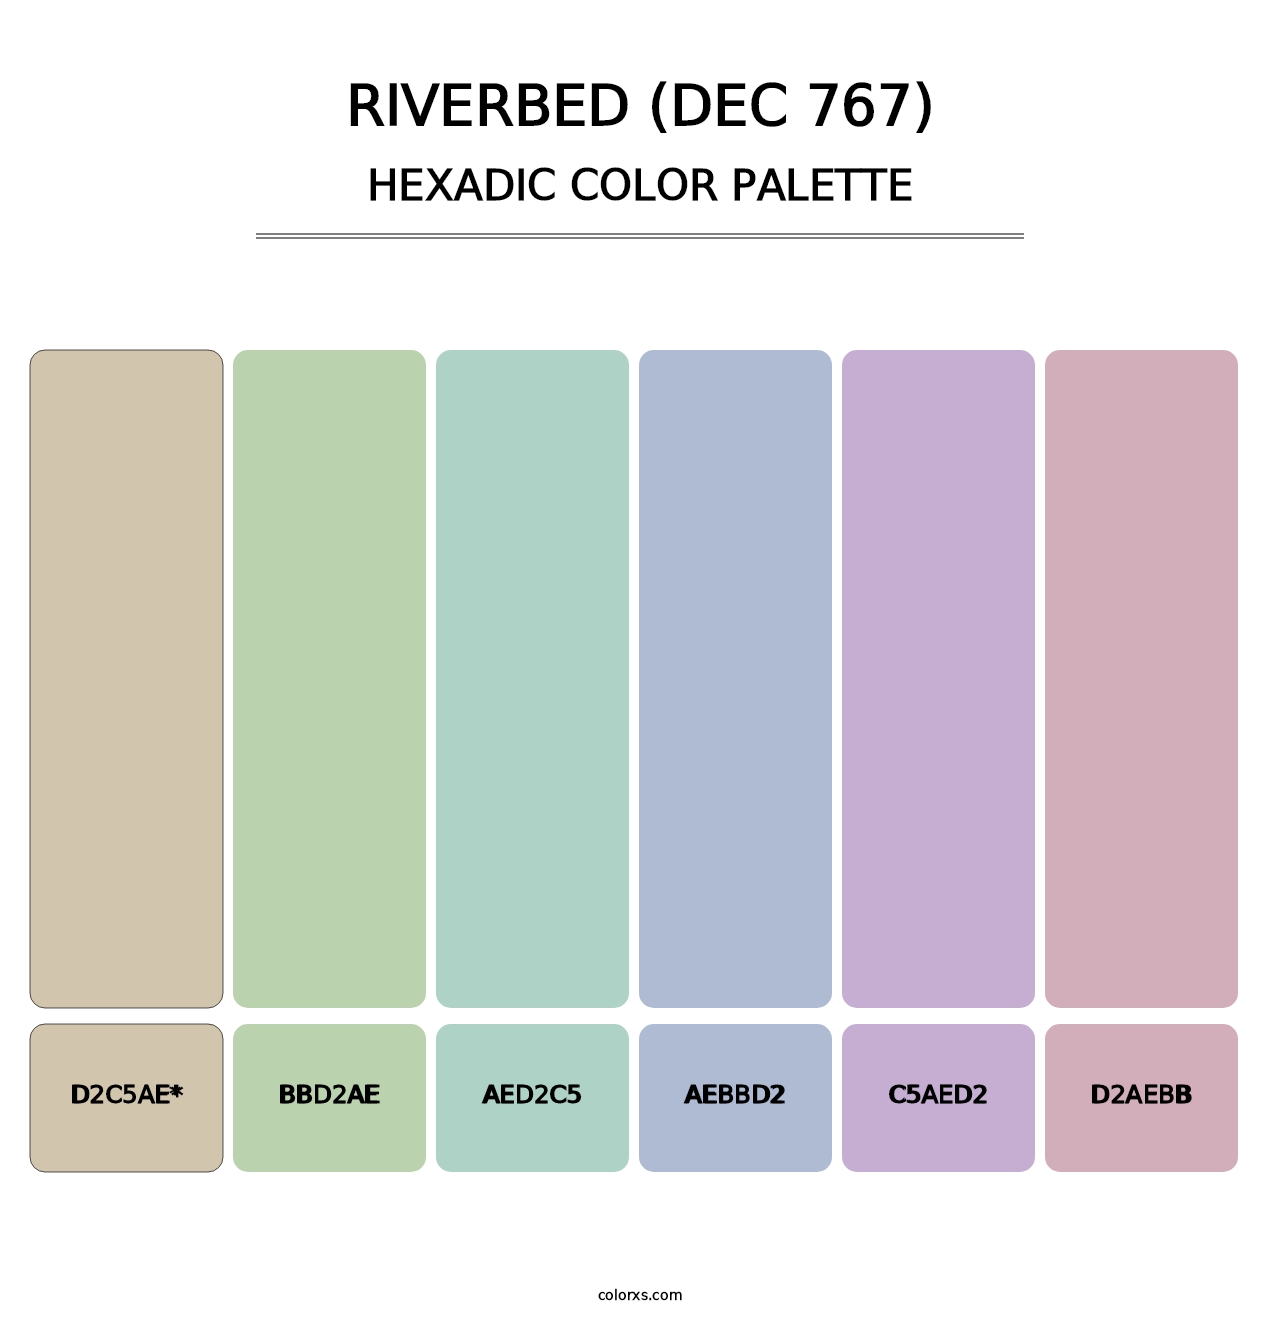 Riverbed (DEC 767) - Hexadic Color Palette